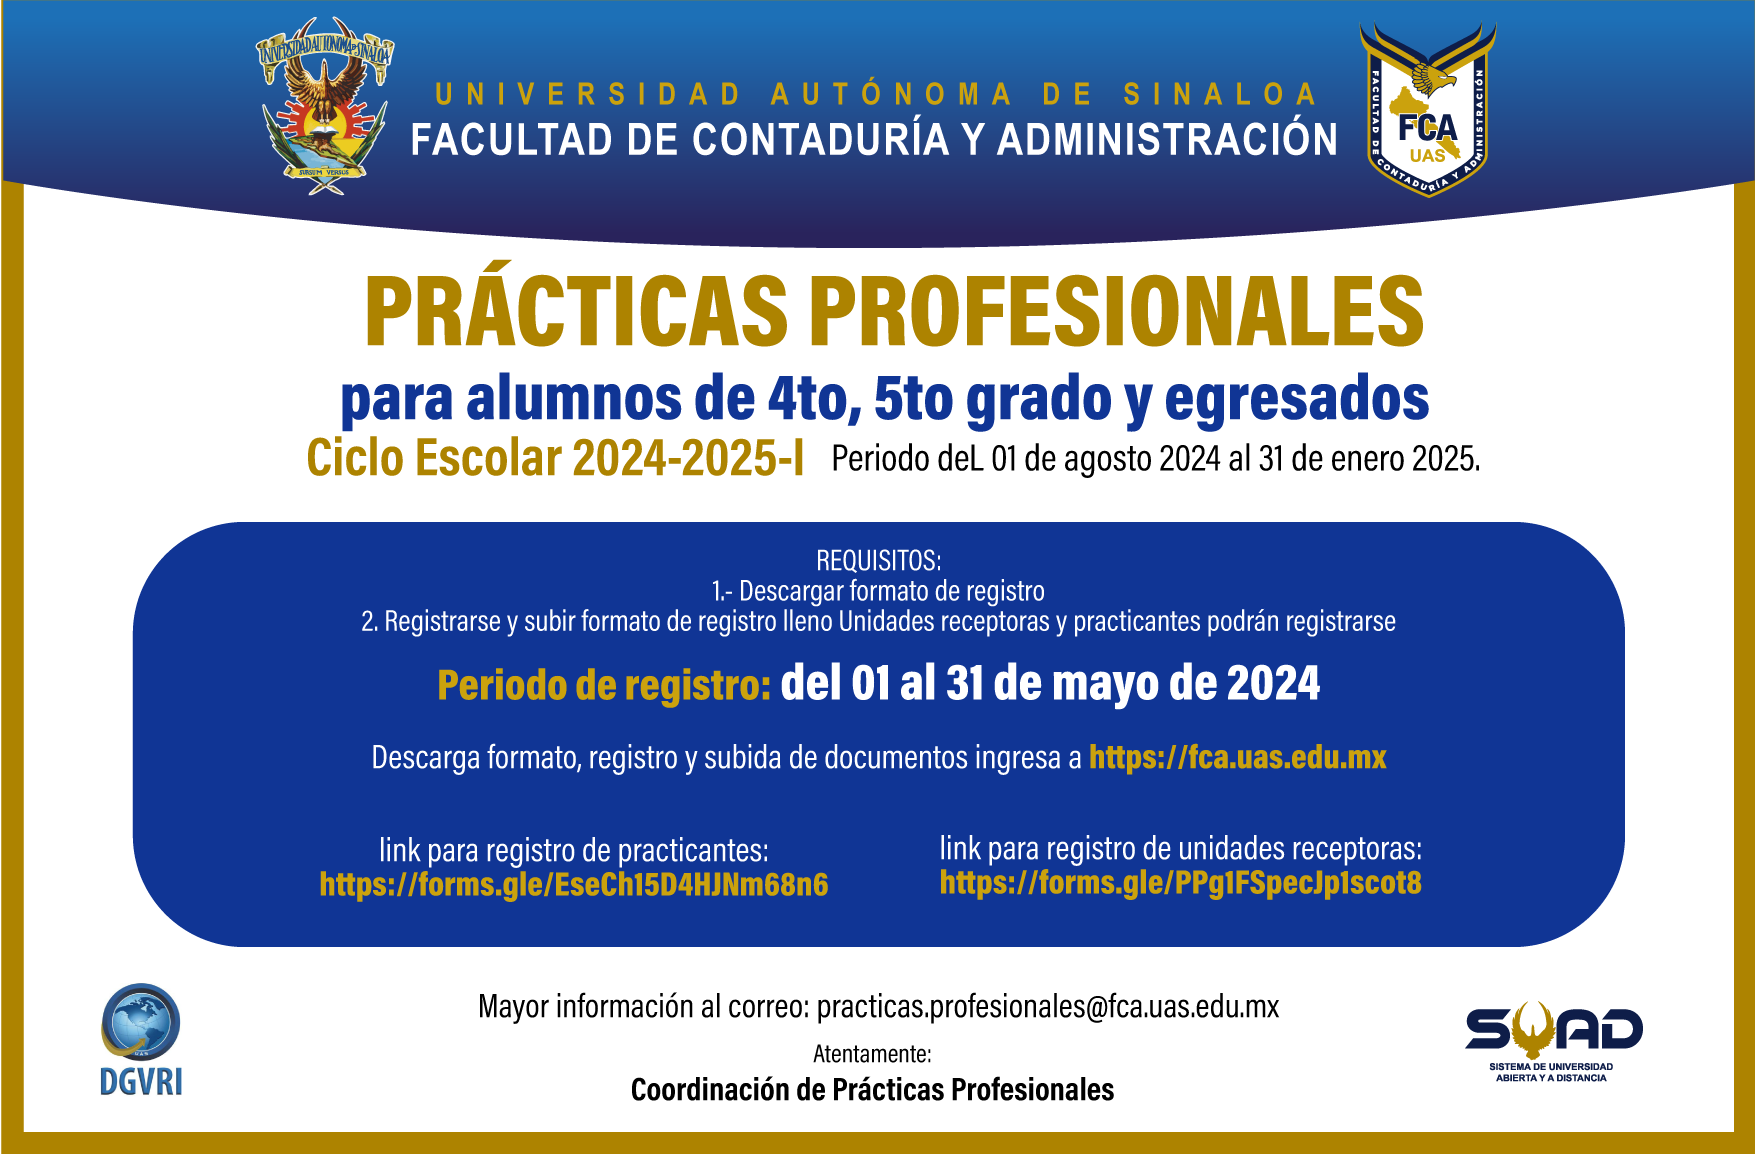 23-convocatoria-practicas-profesionales-2024-2025-1-web.png